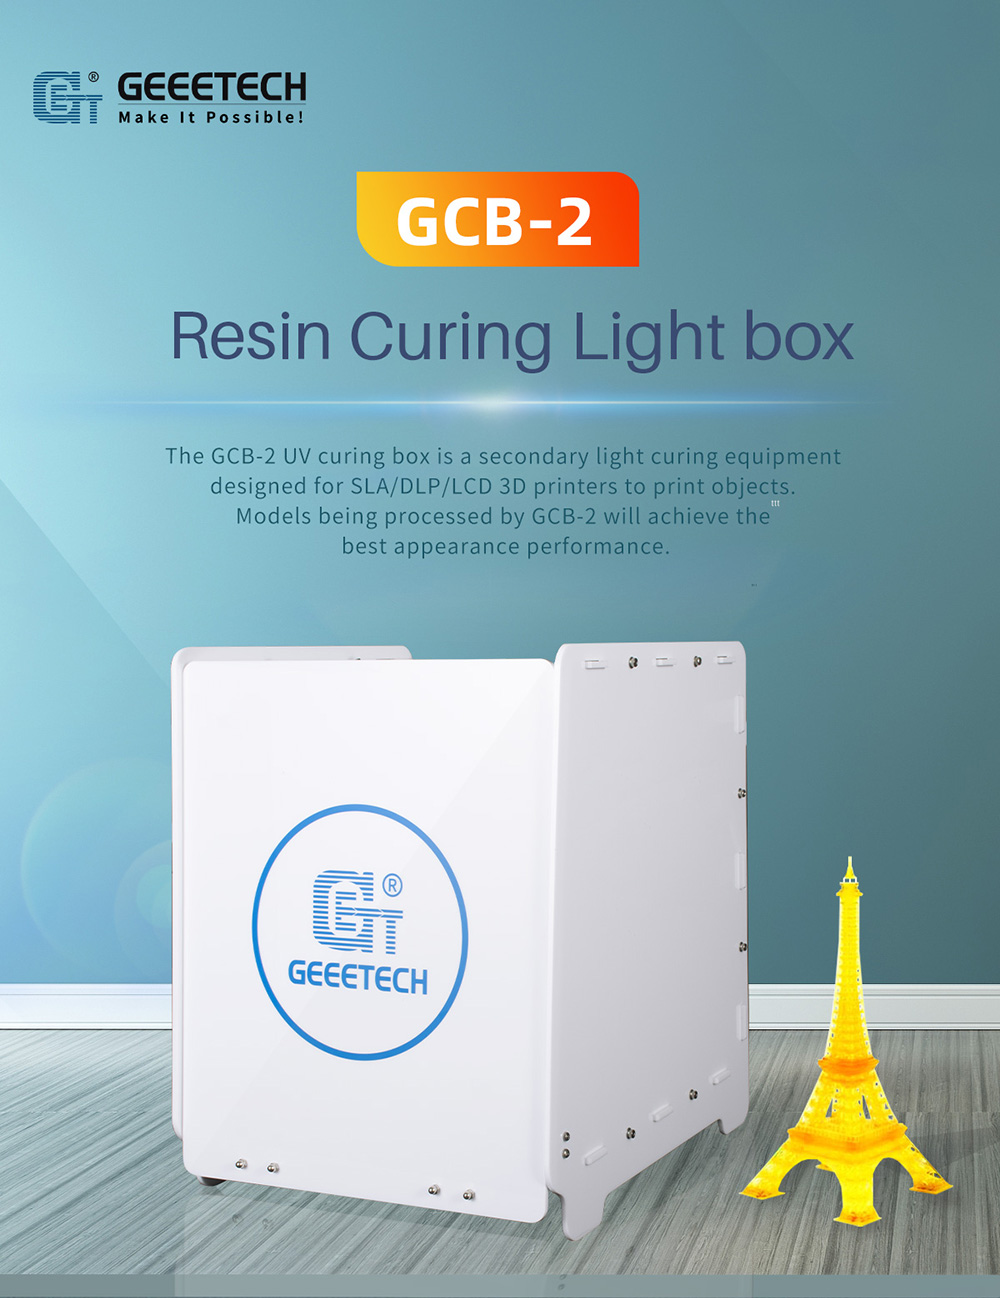 geeetech cgb-2 resin curing light box